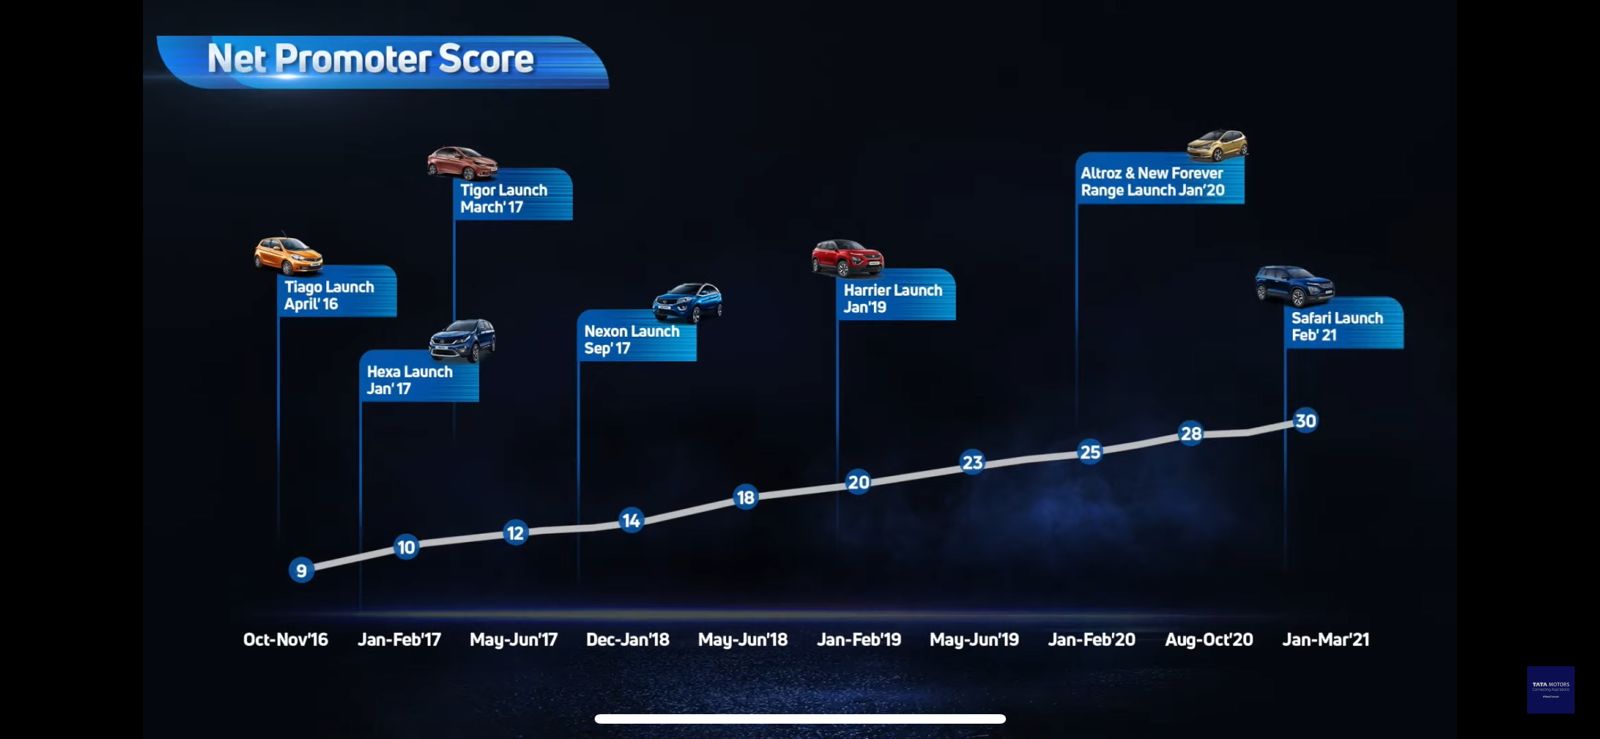 <p>Tata Motors Net Promoter score over the last few years</p>